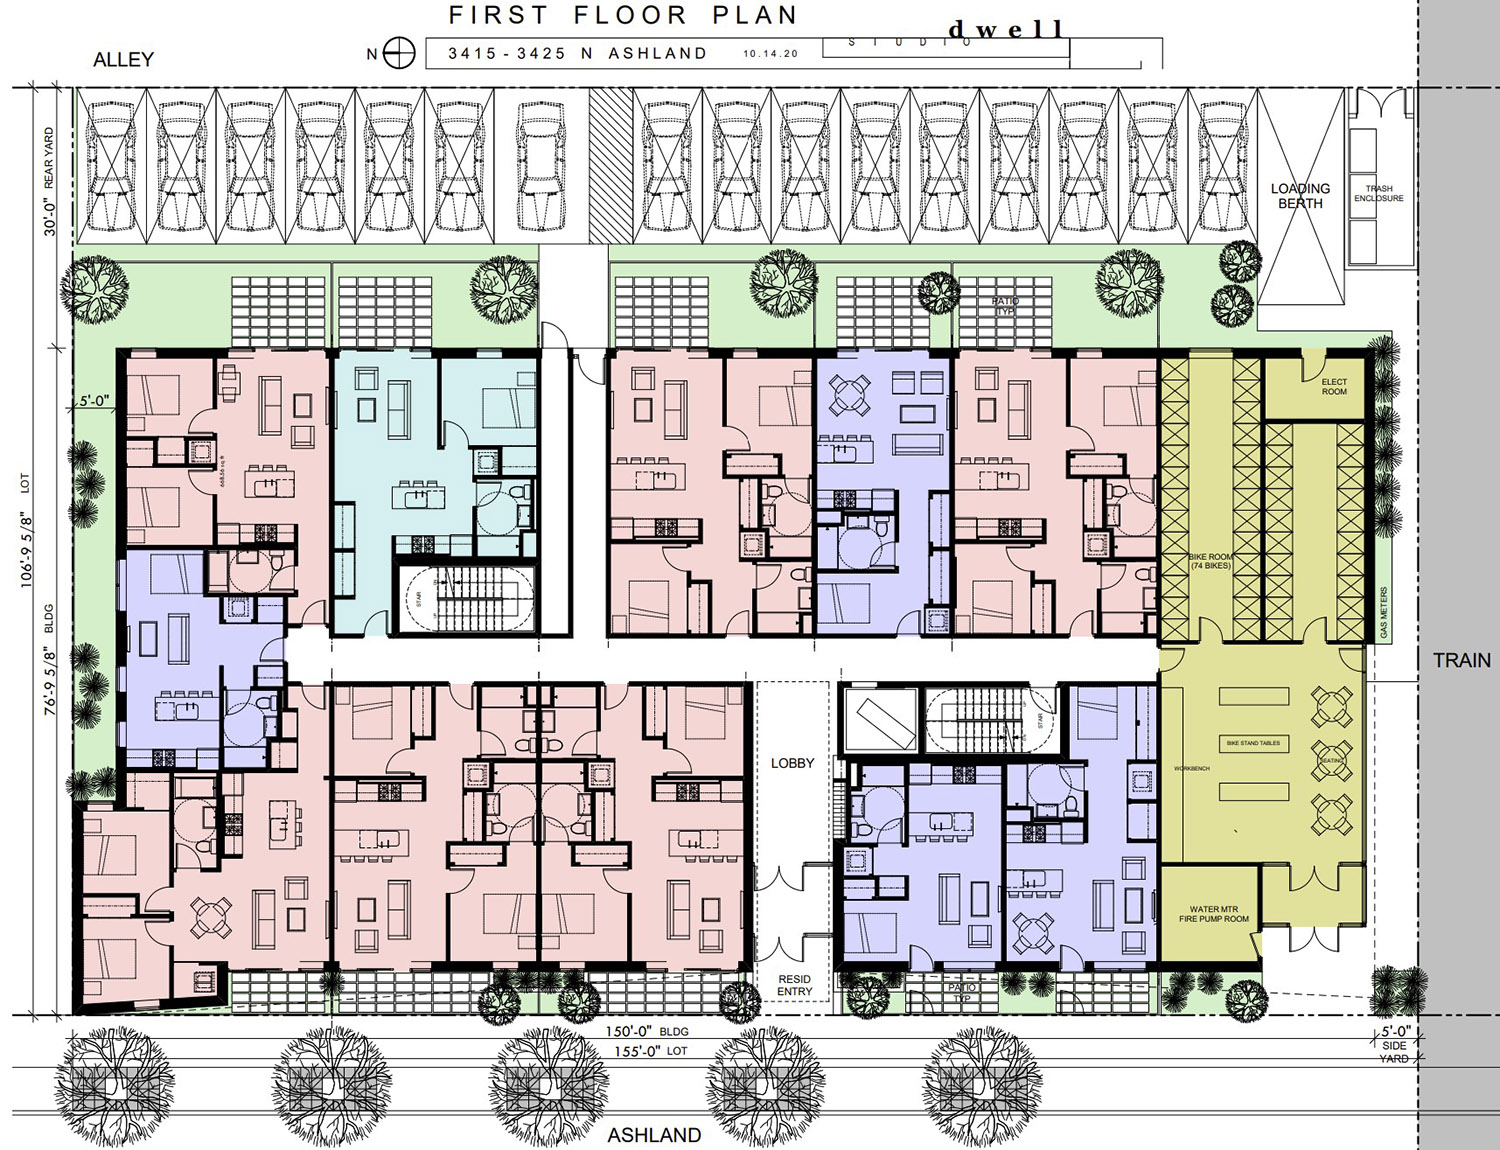 First Floor Plan for 3415 N Ashland Avenue. Drawing by Studio Dwell